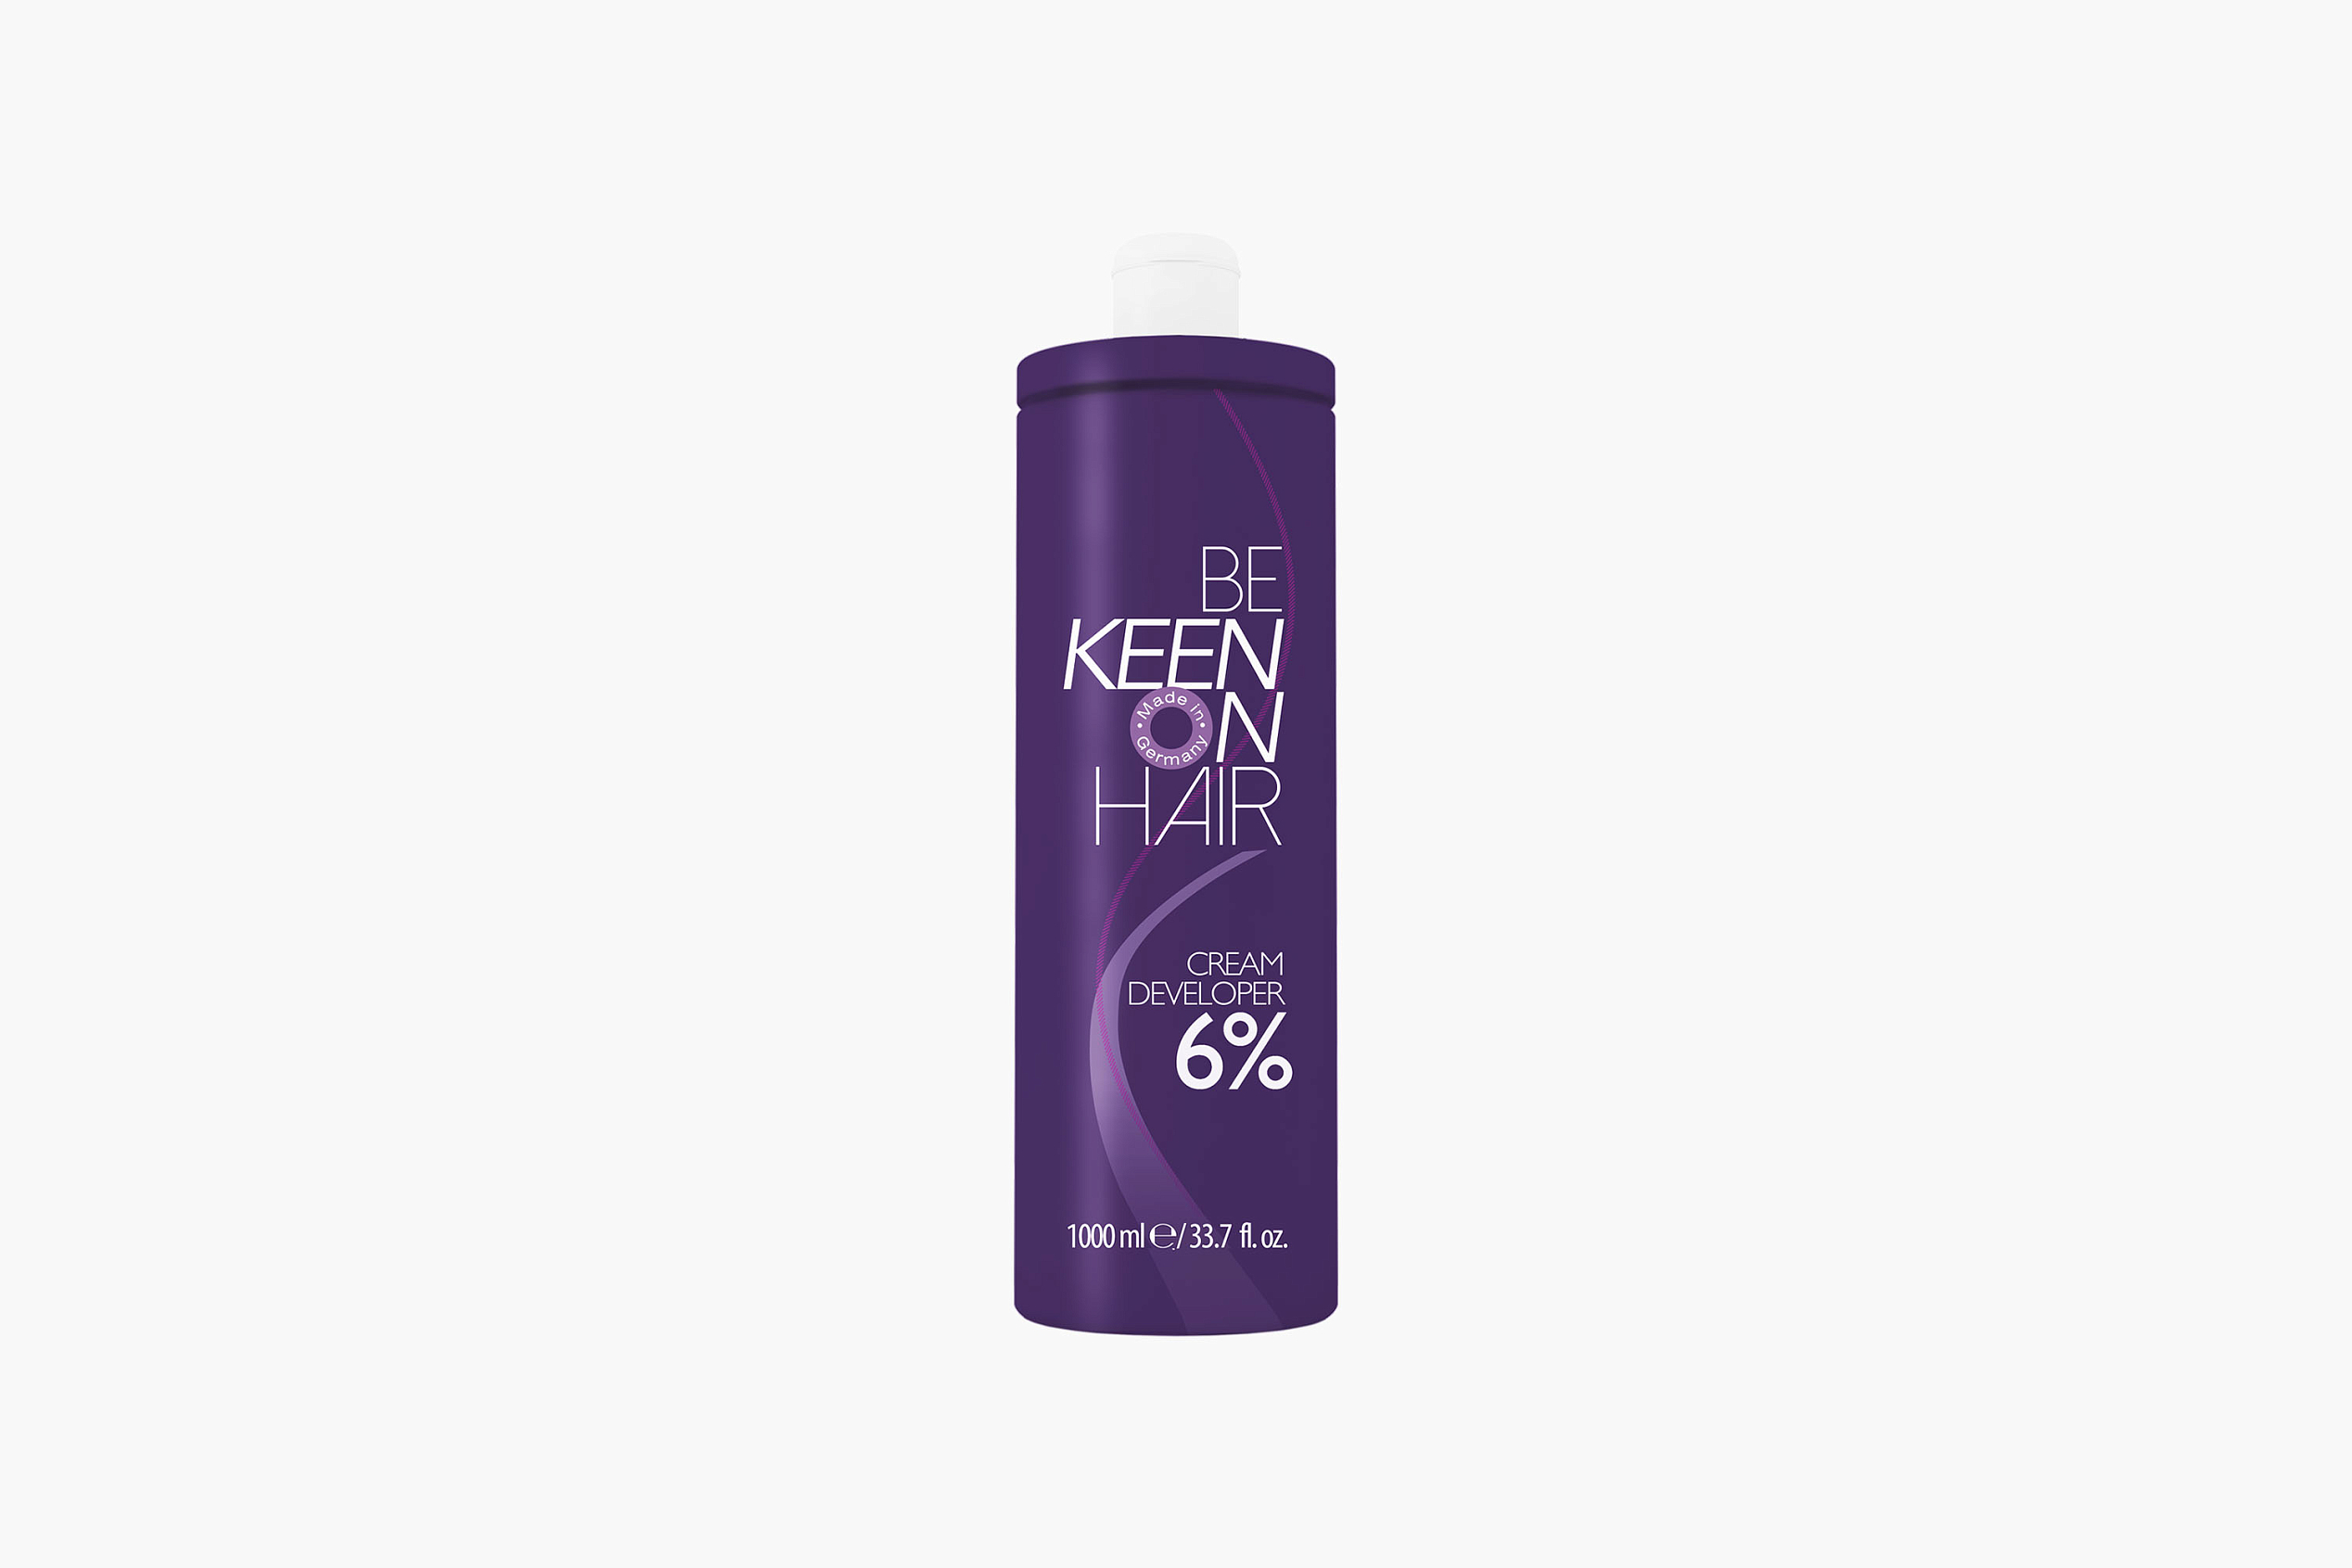 KEEN Cream Developer 6% фото 1